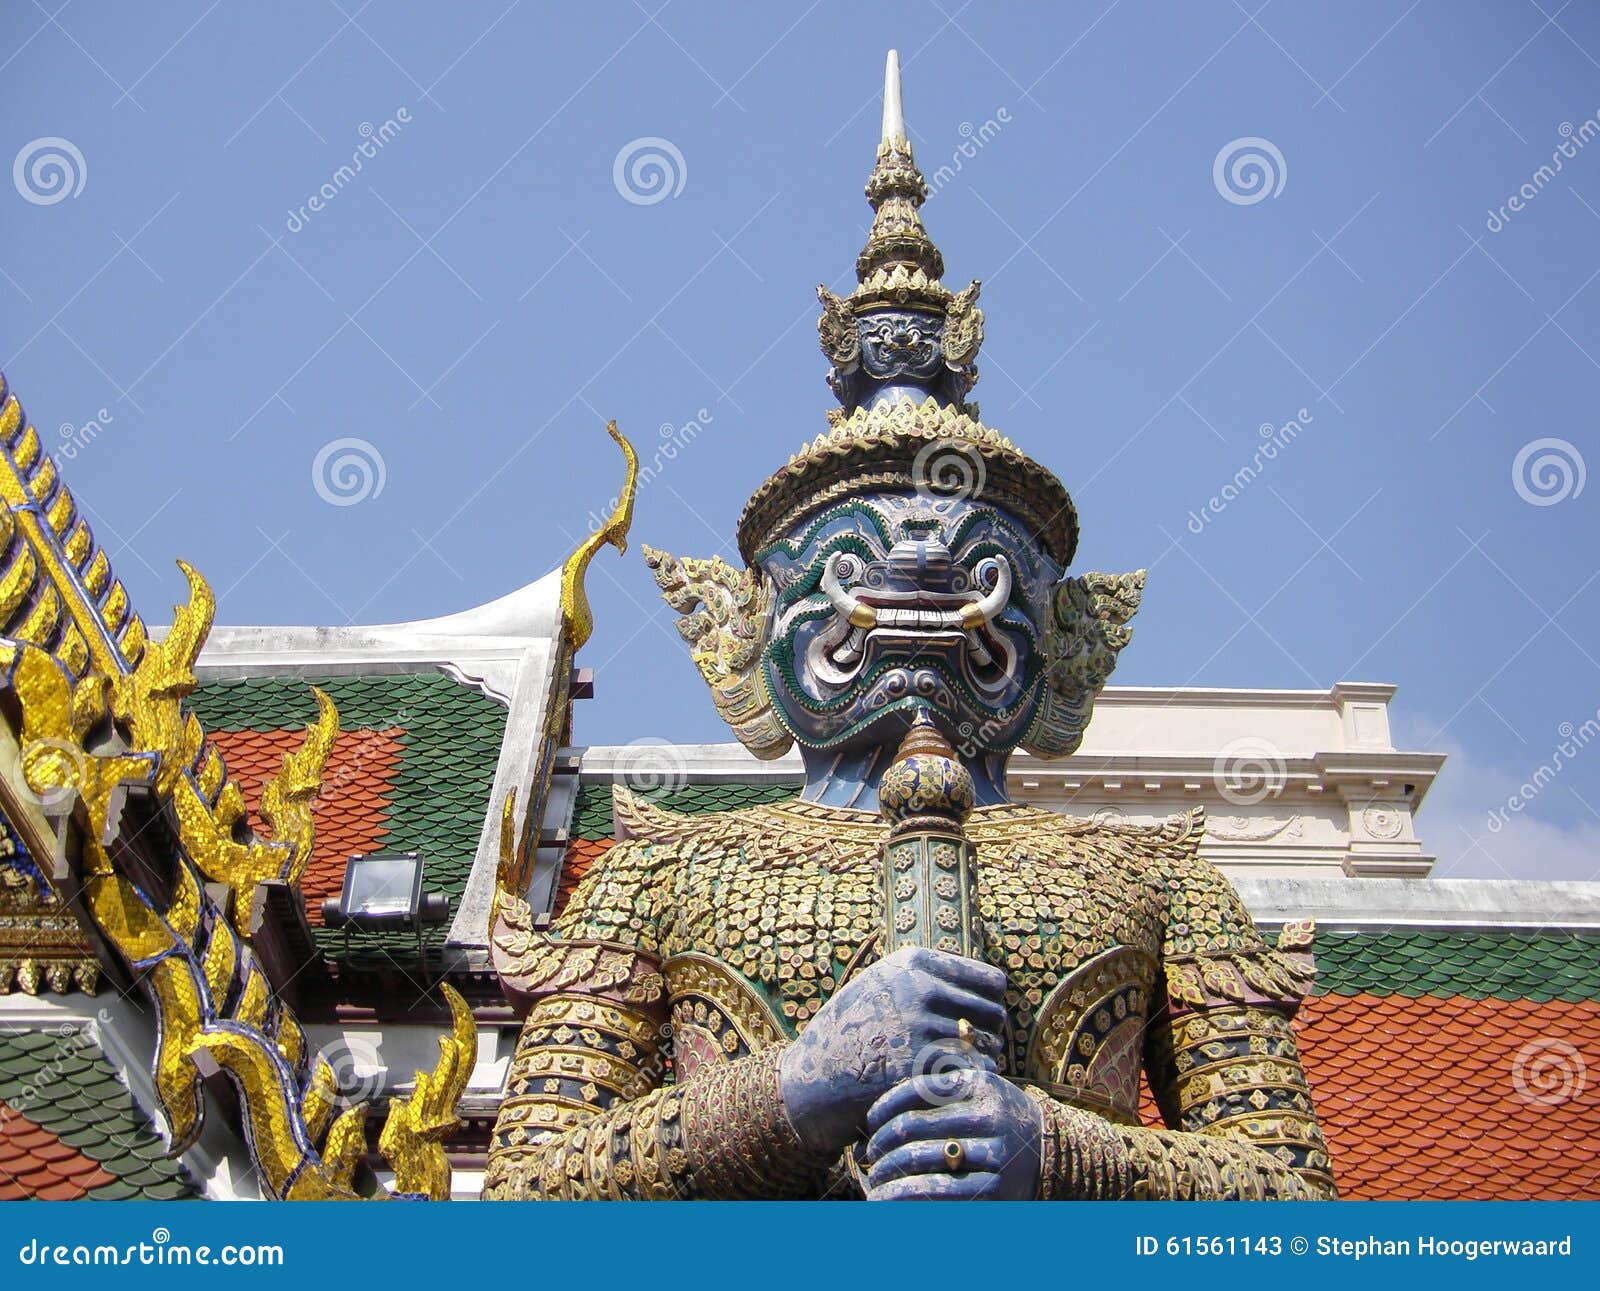 giant demon, wat phra keaw, bangkok, thailand